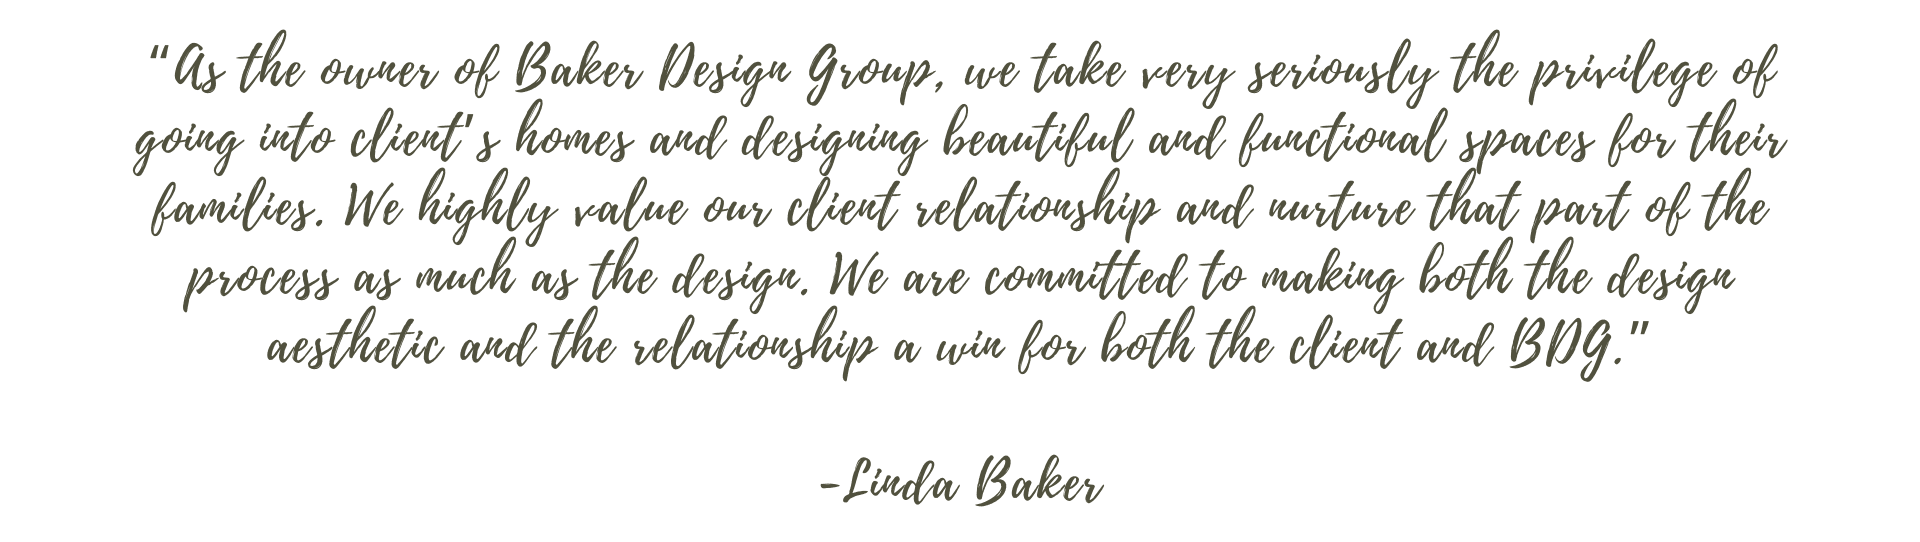 Baker Design Group - What Does Baker Design Group Provide For You?